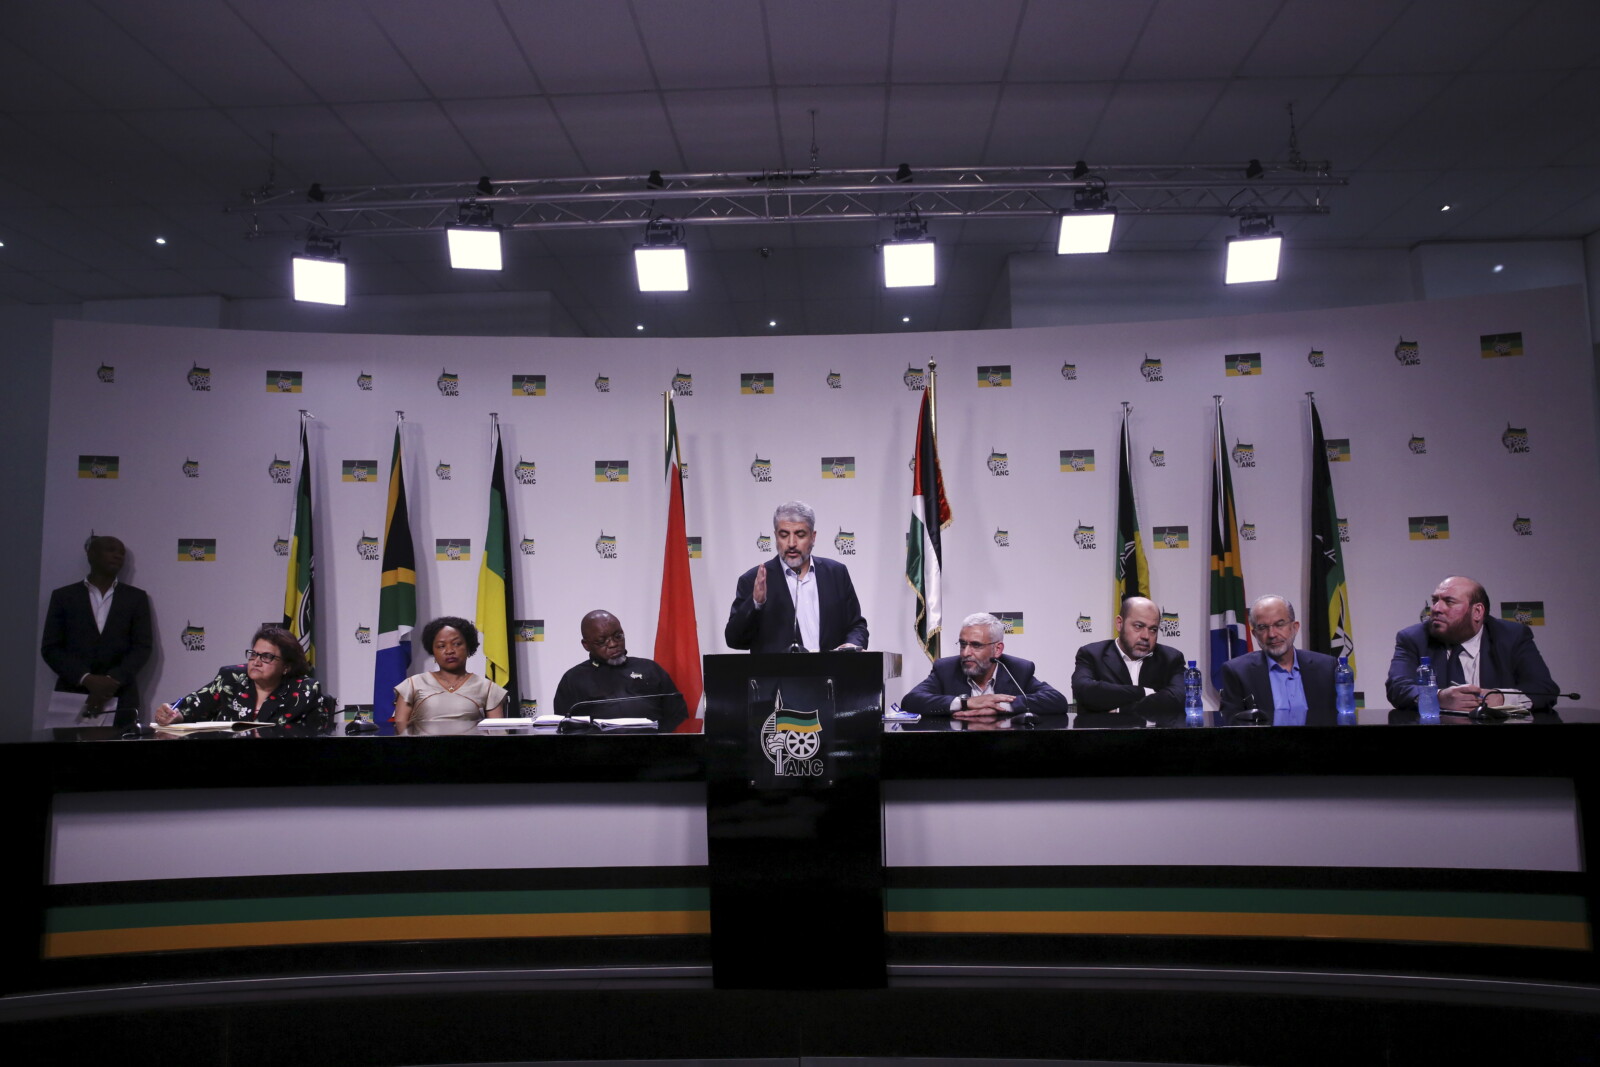 Khaled Mashal addresses media representatives in Johannesburg as part of Hamas's 2015 delegation to South Africa (Photo: Reuters/Siphiwe Sibeko).